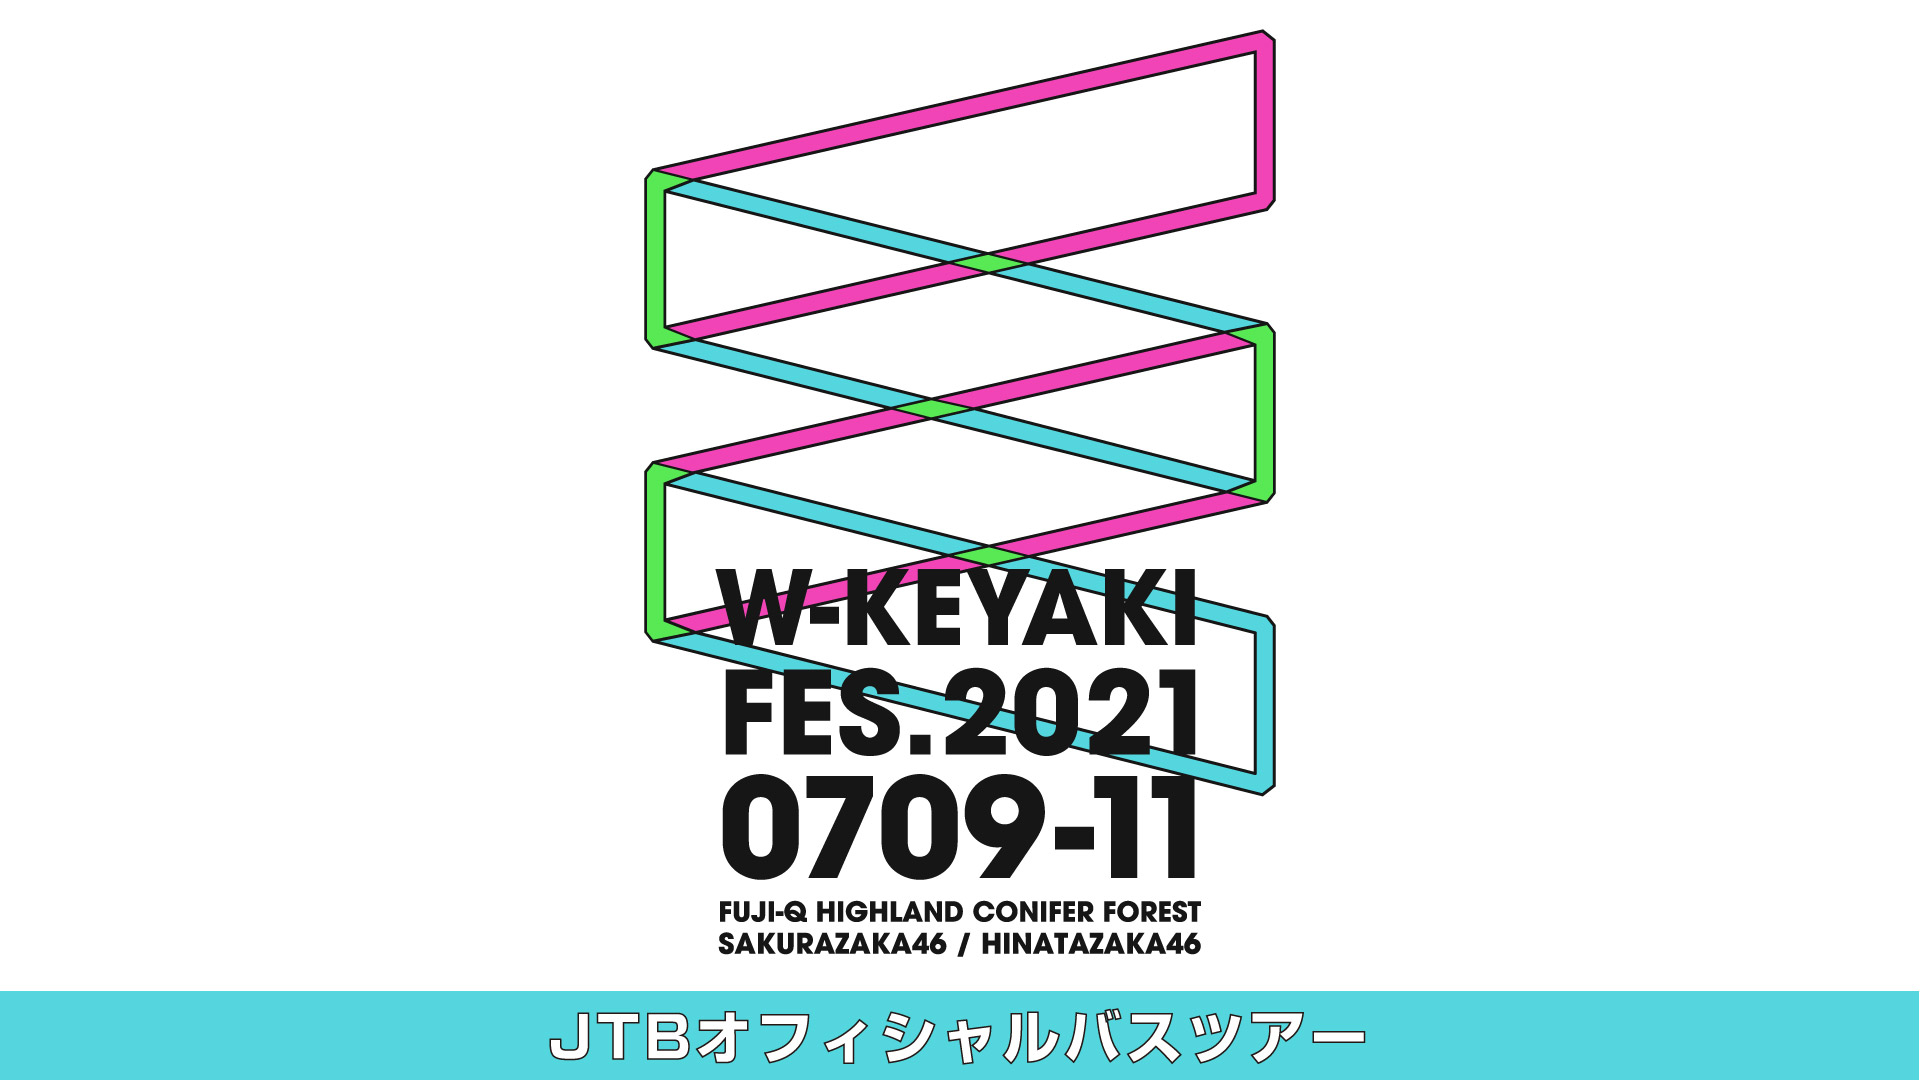 W-KEYAKI FES.2021 JTB アクセスツアー